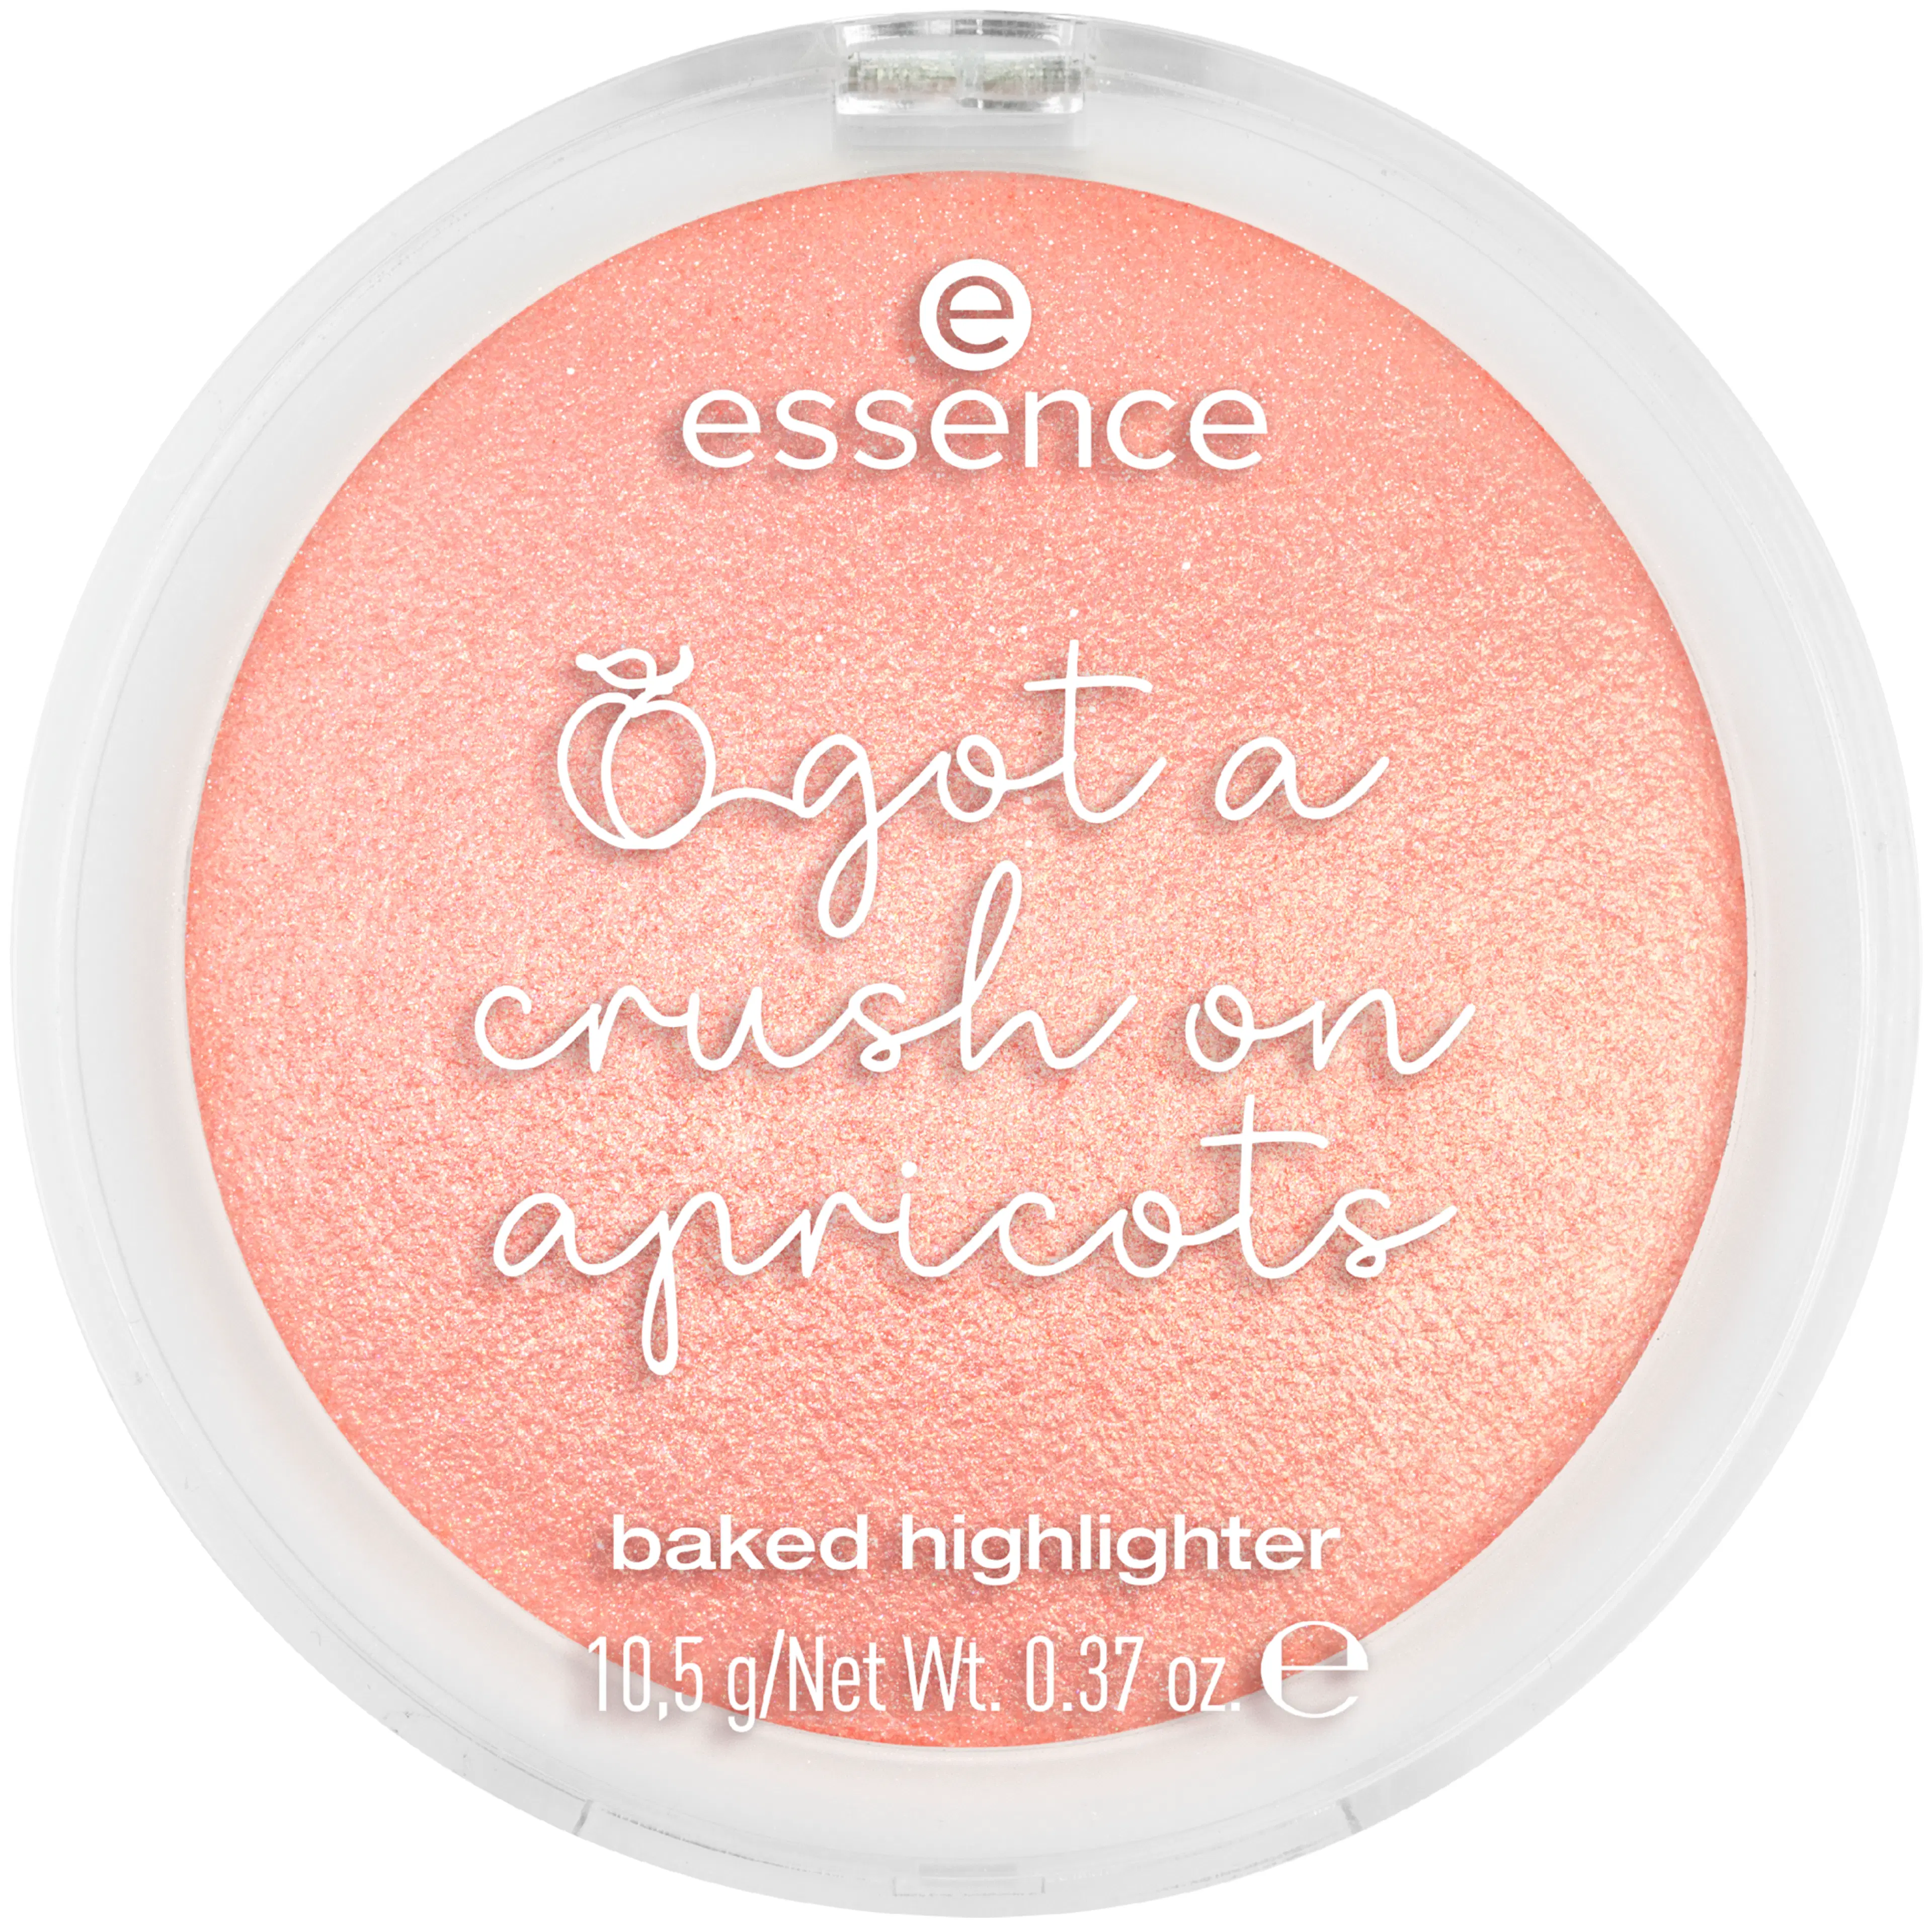 essence got a crush on apricots highlighter